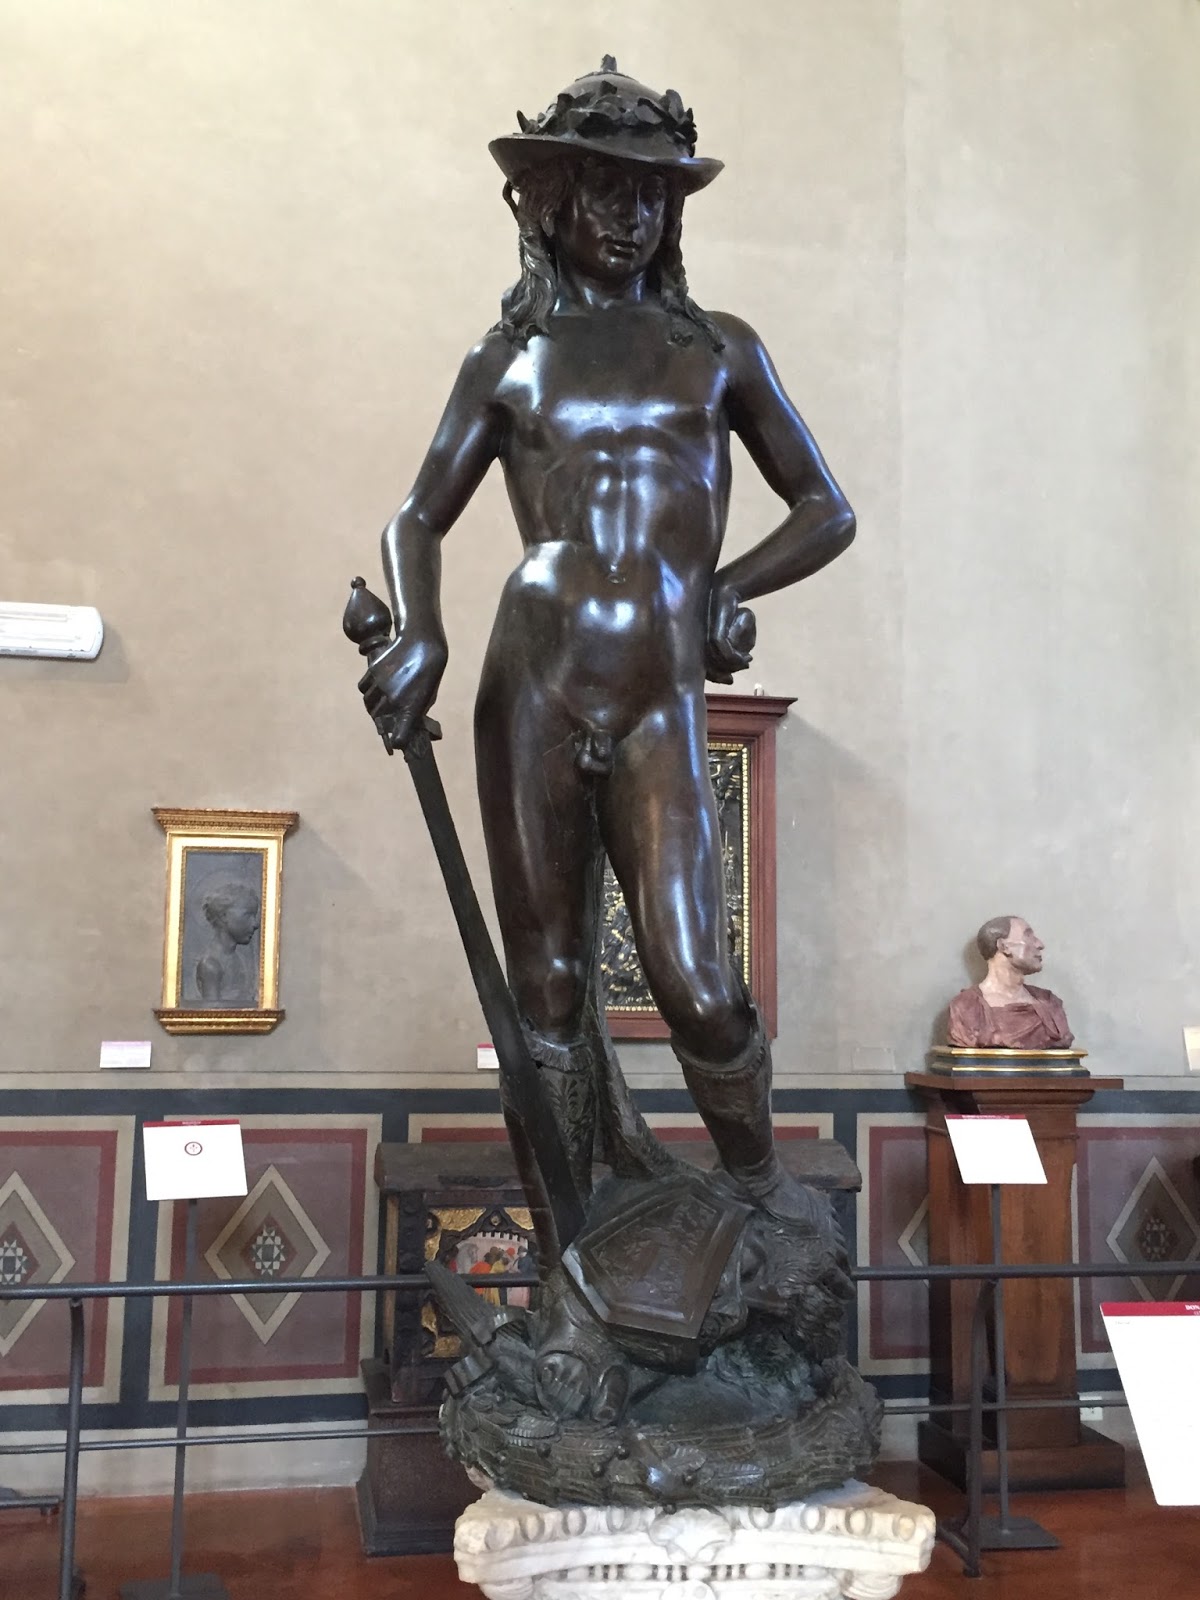 How Did Donatello Influence Renaissance Art